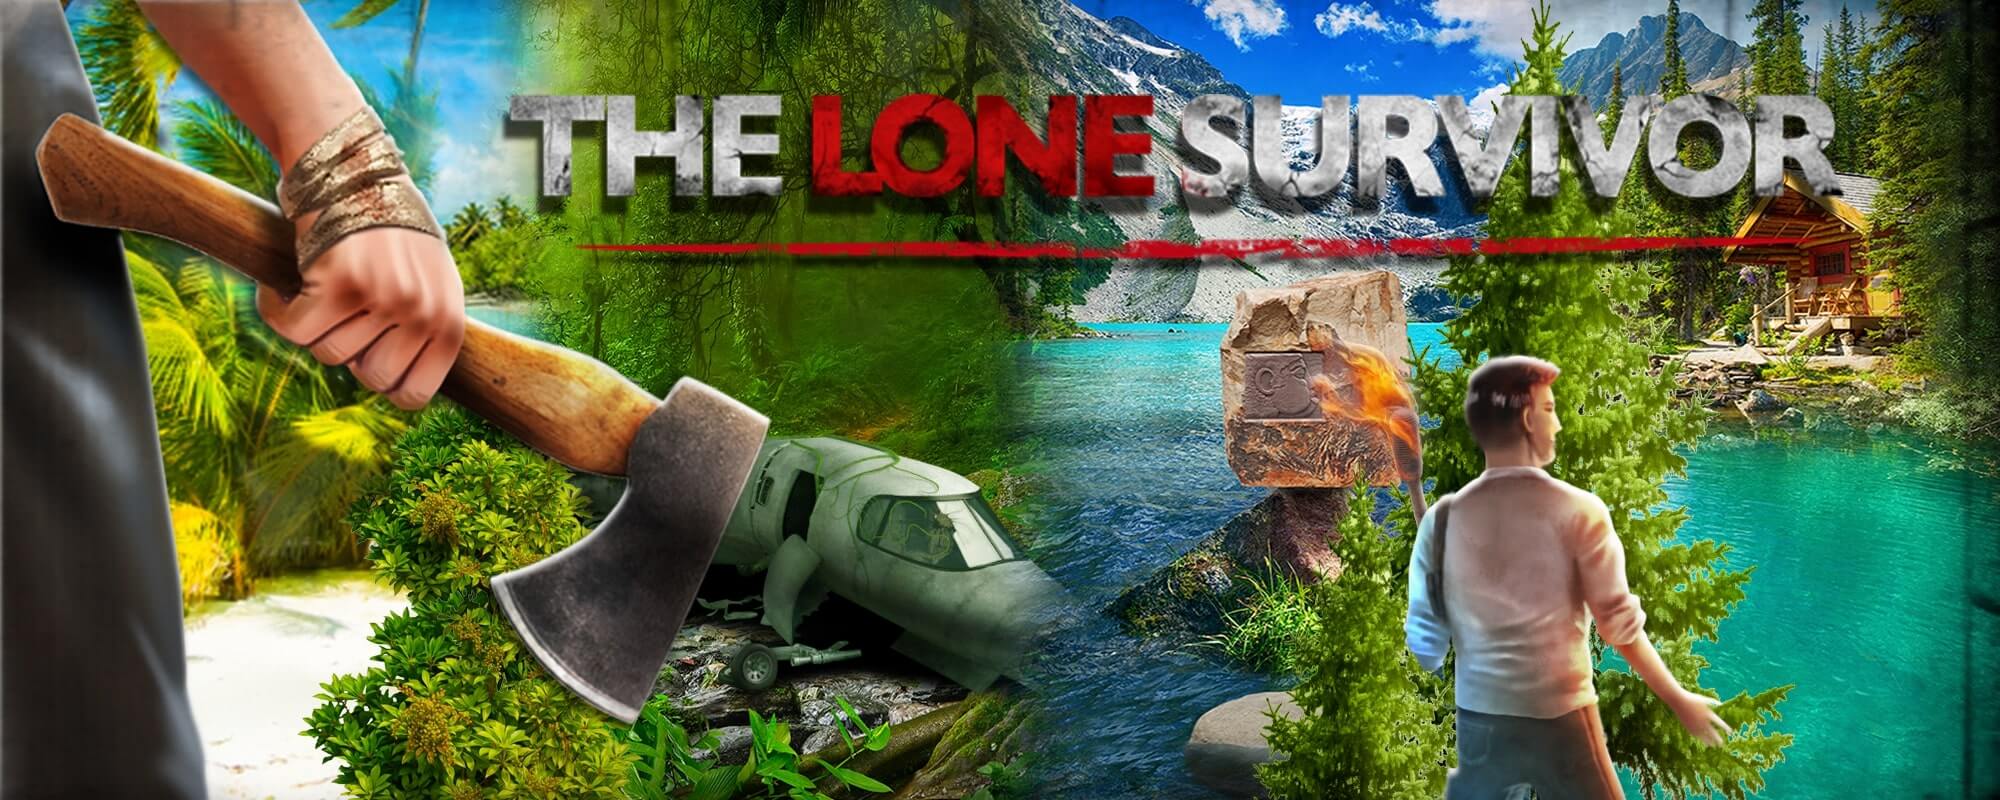 The Lone Survivor